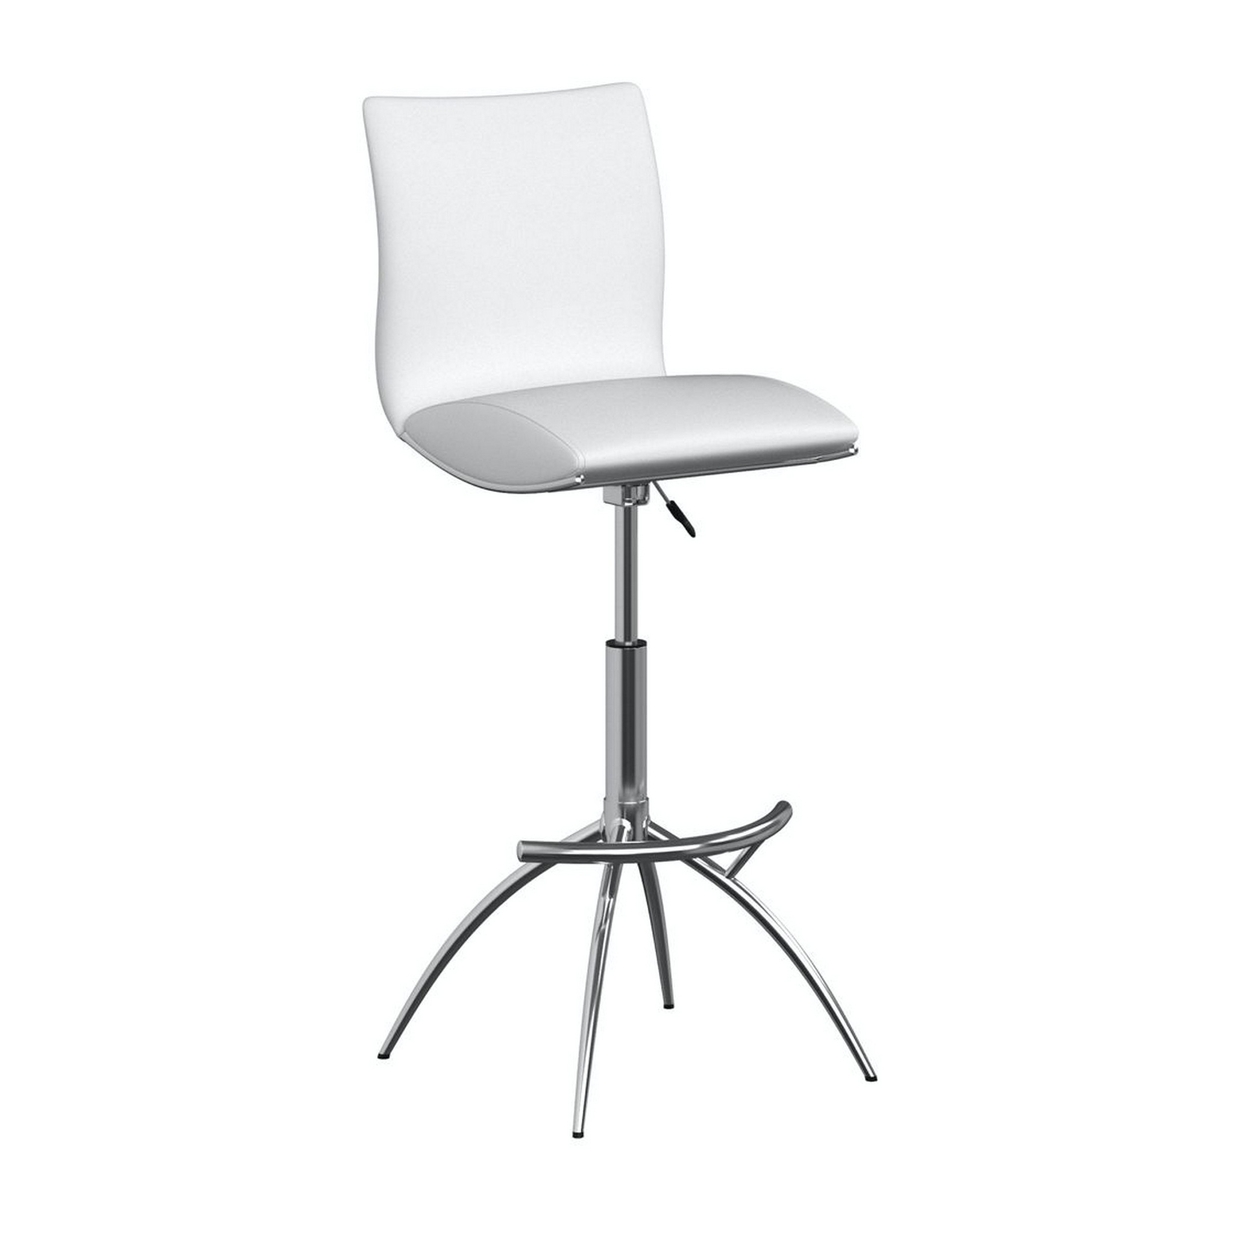 Deko 26-31 Inch Adjustable Height Barstool Chair, Set Of 2, Chrome White Faux Leather - Saltoro Sherpi